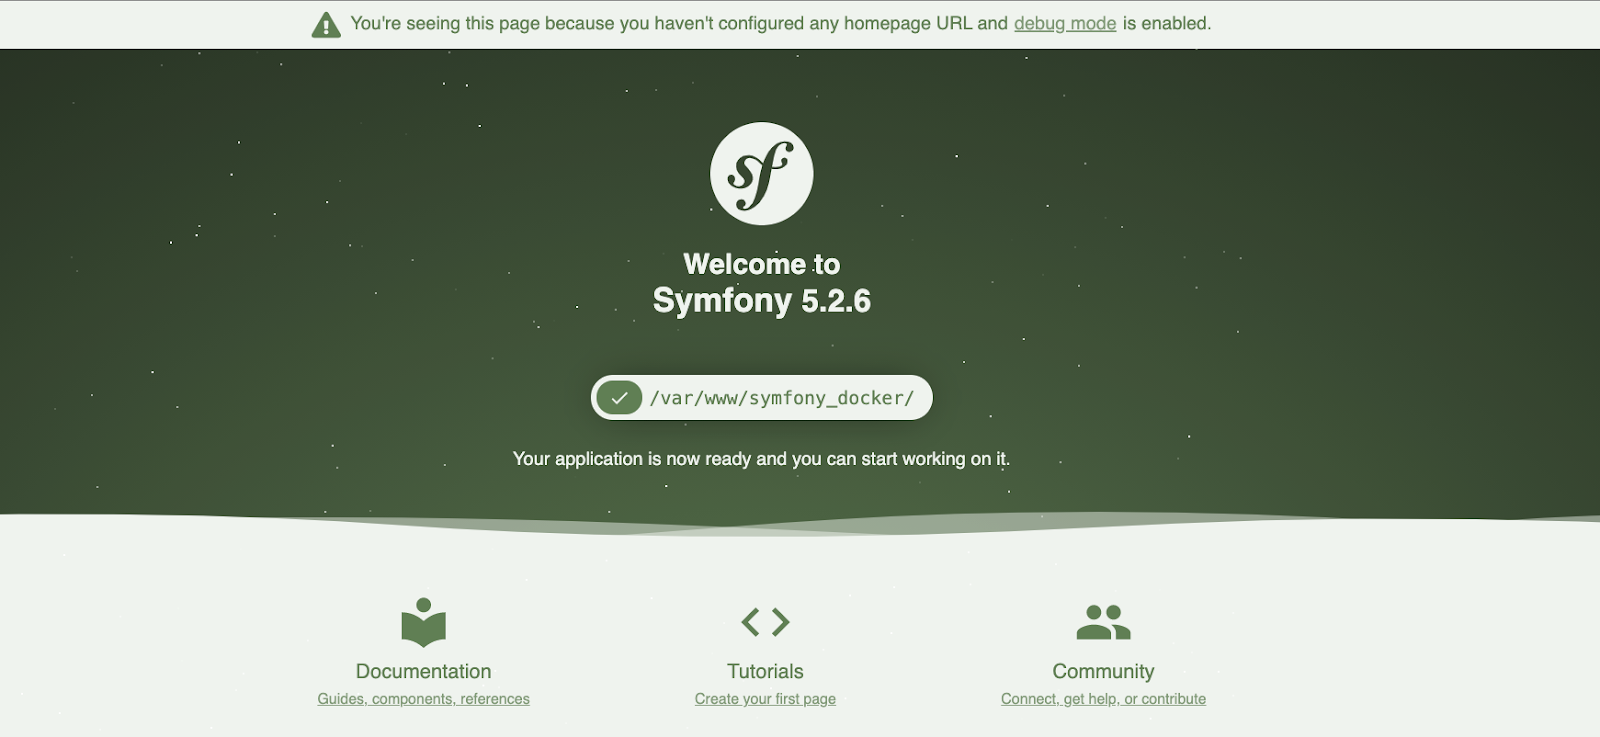 Default Homepage for Symfony